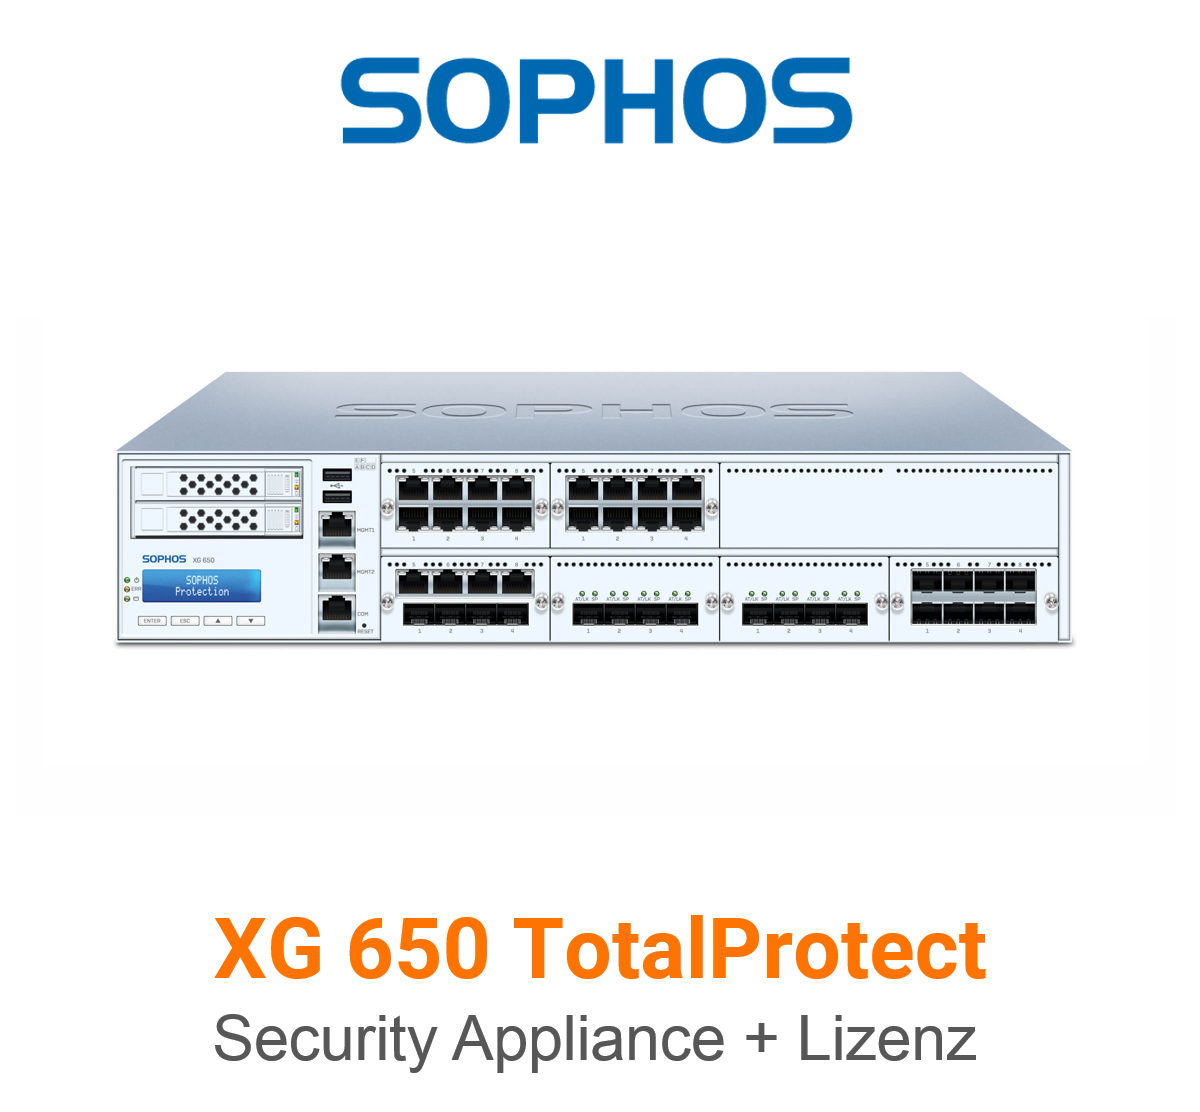 Sophos XG 650 TotalProtect Bundle (Hardware + Lizenz)